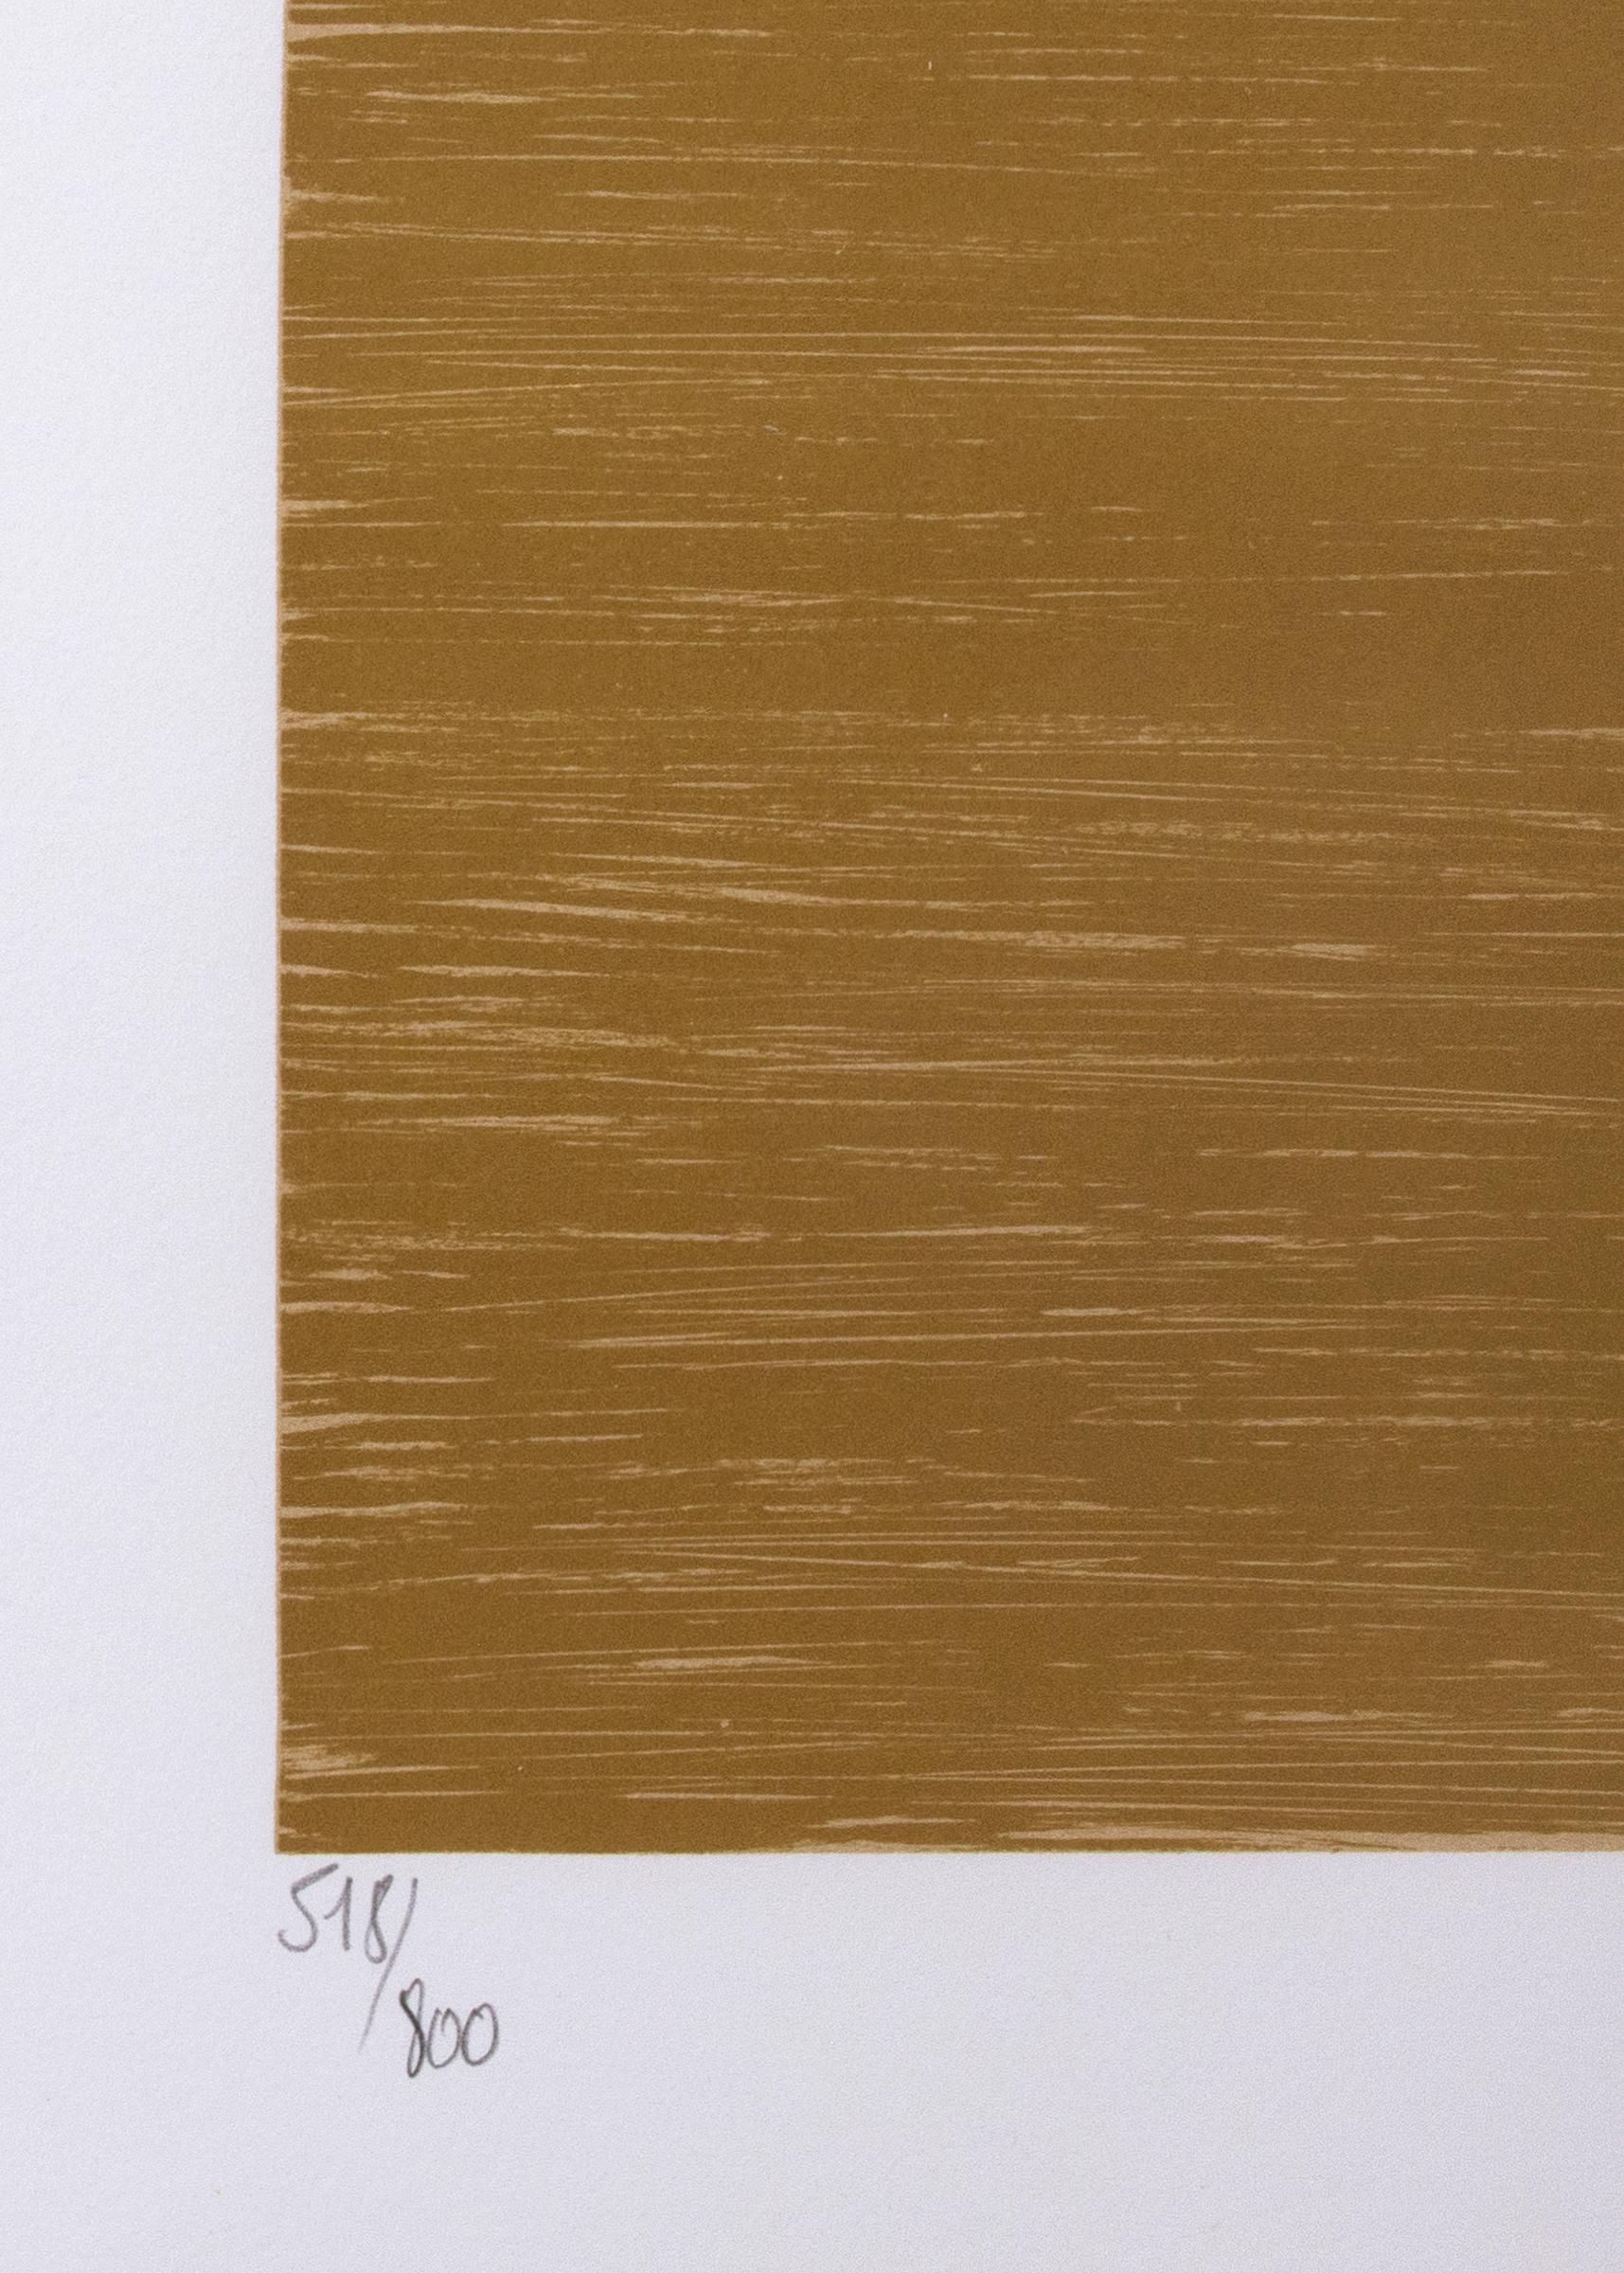 Crackers 518/800 Print, Framed Serigraph/Silkscreen by Wayne Thiebaud 2005 1